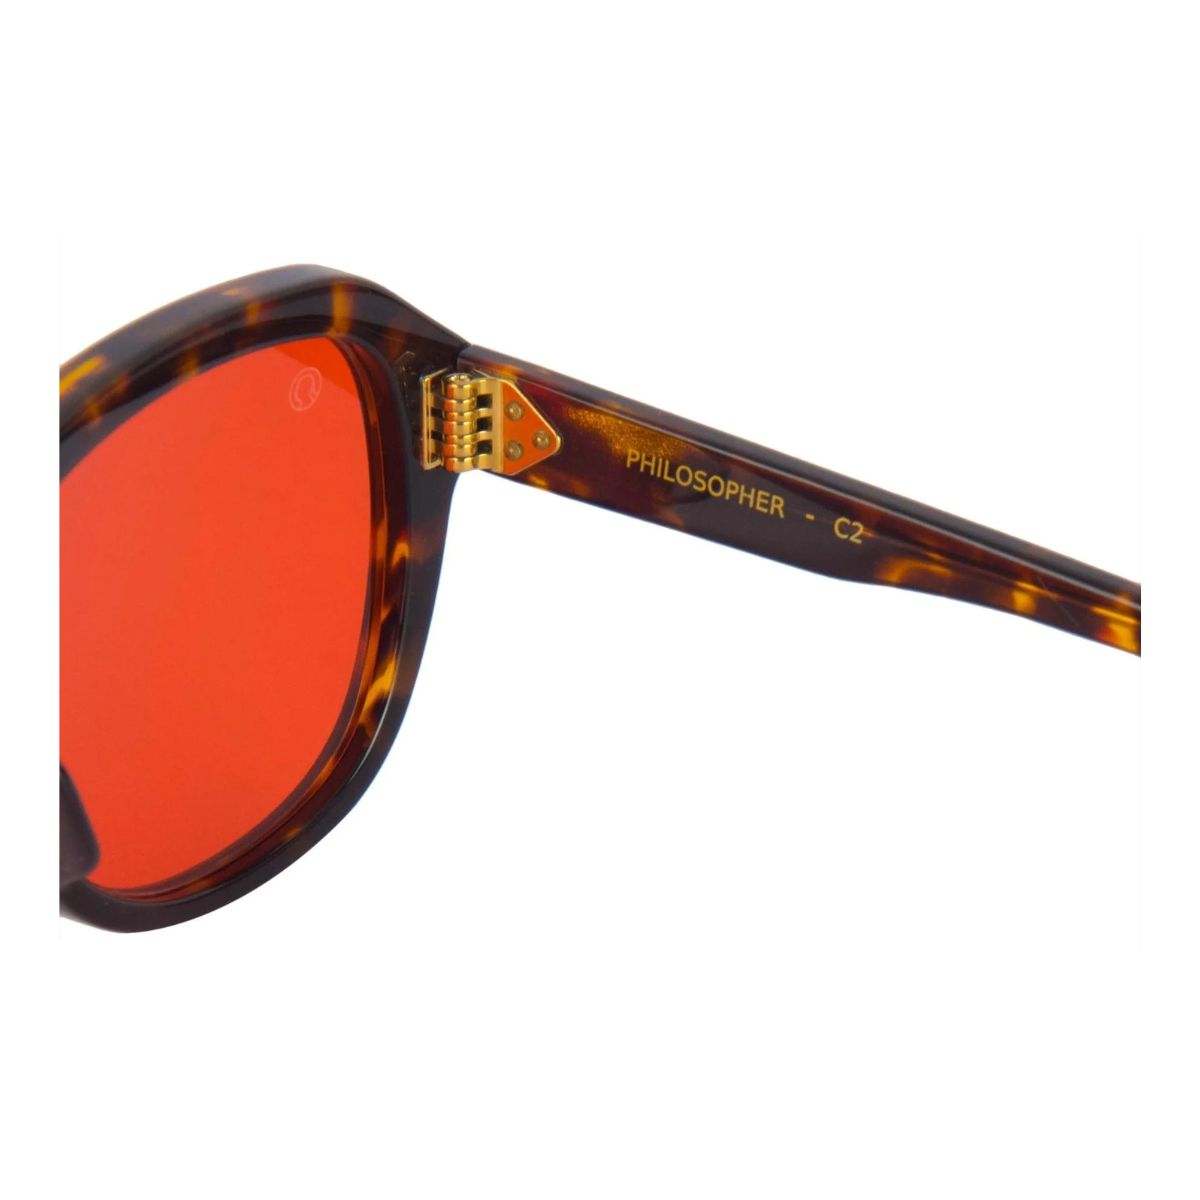 " The Monk Philosopher C2 Trendy Eyewear Sunglasses For Unisex Online At Optorium"